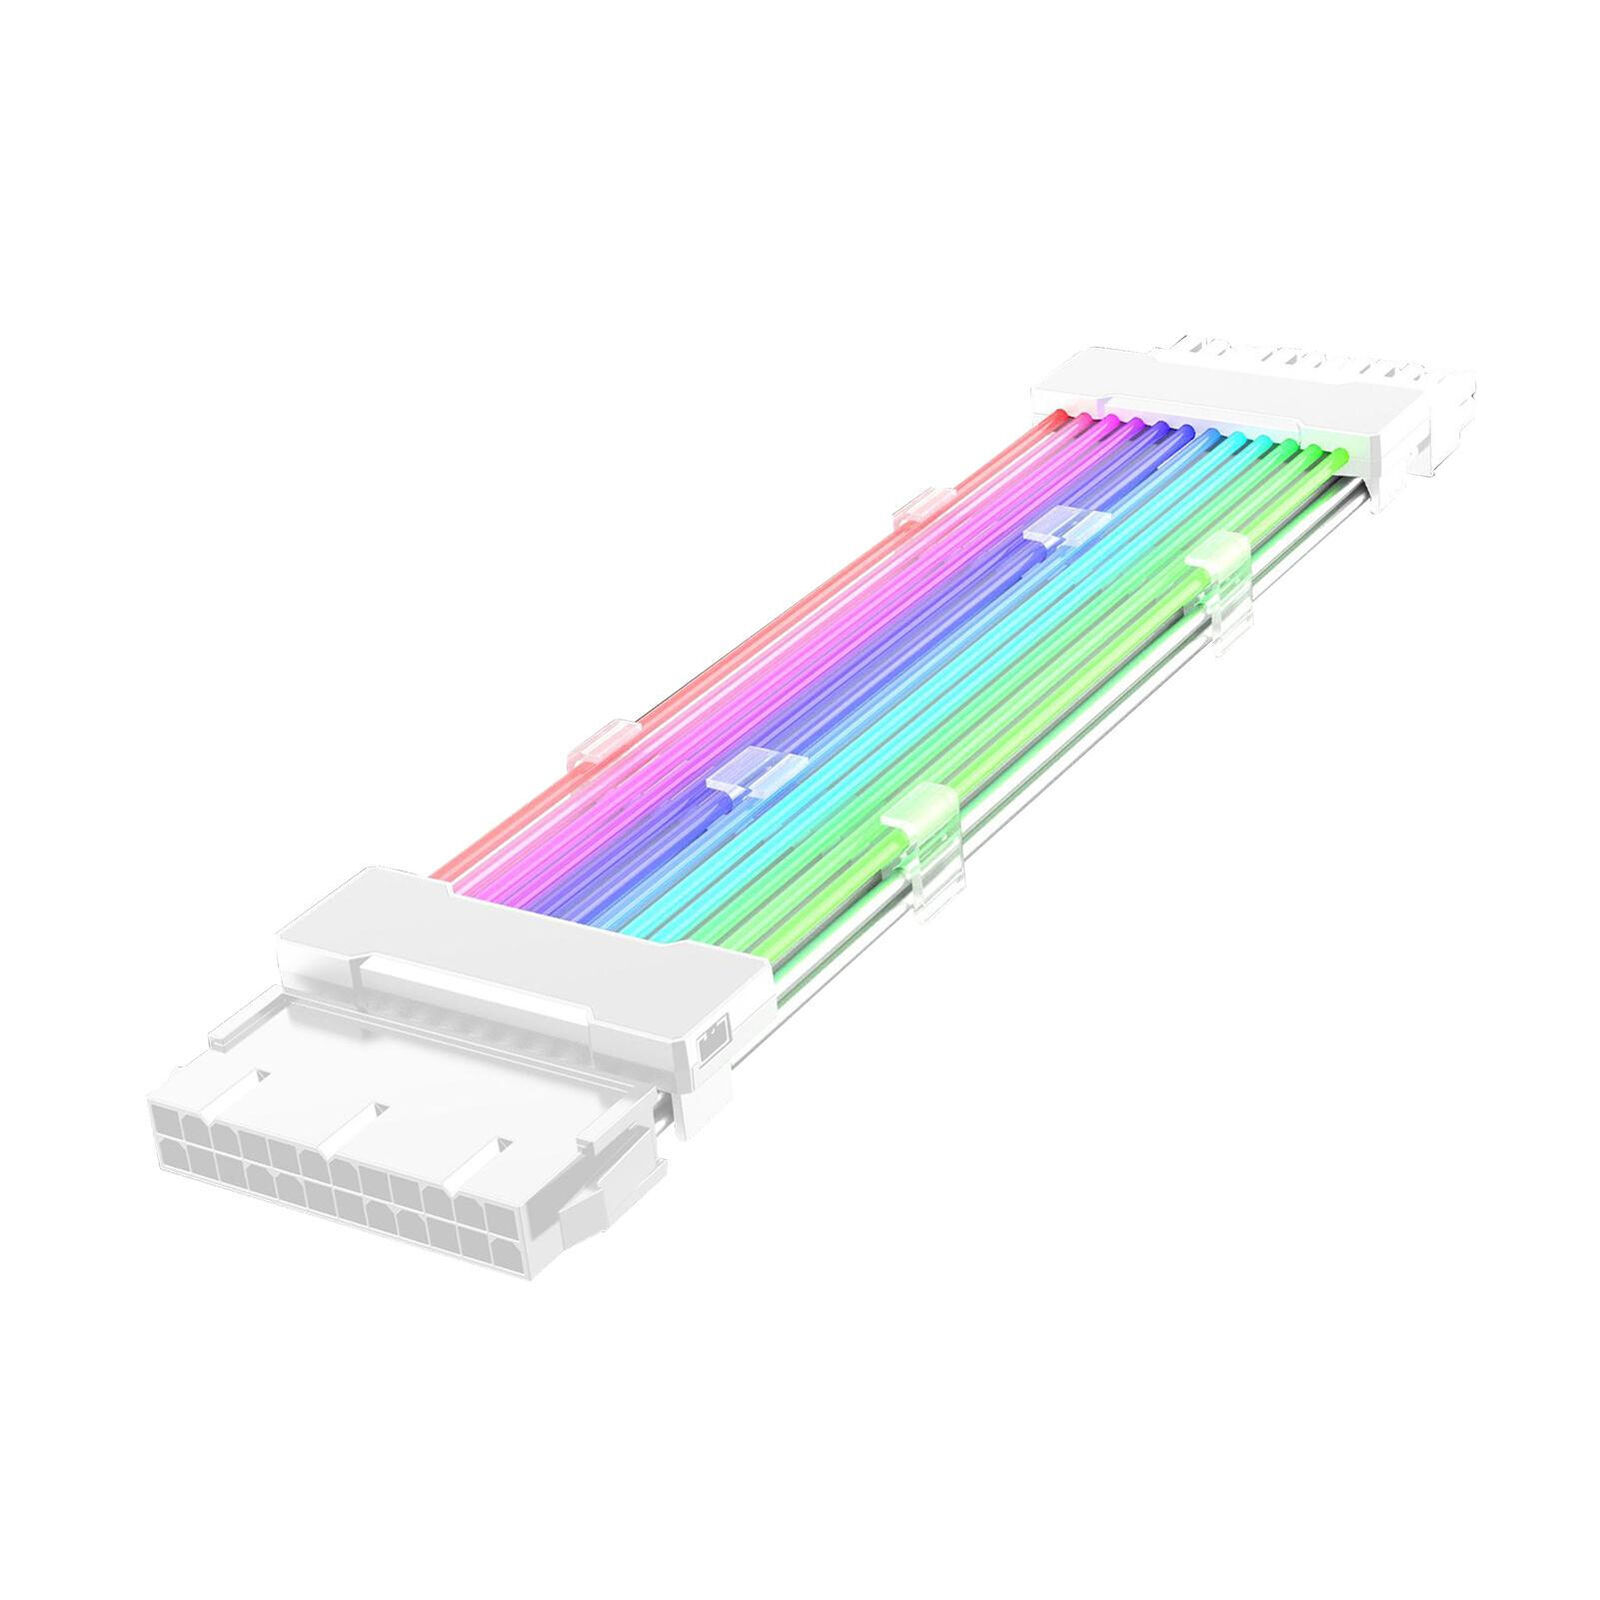 24 Pins RGB Luminous Power Extension Cable Addressable ARGB Computer Game Case